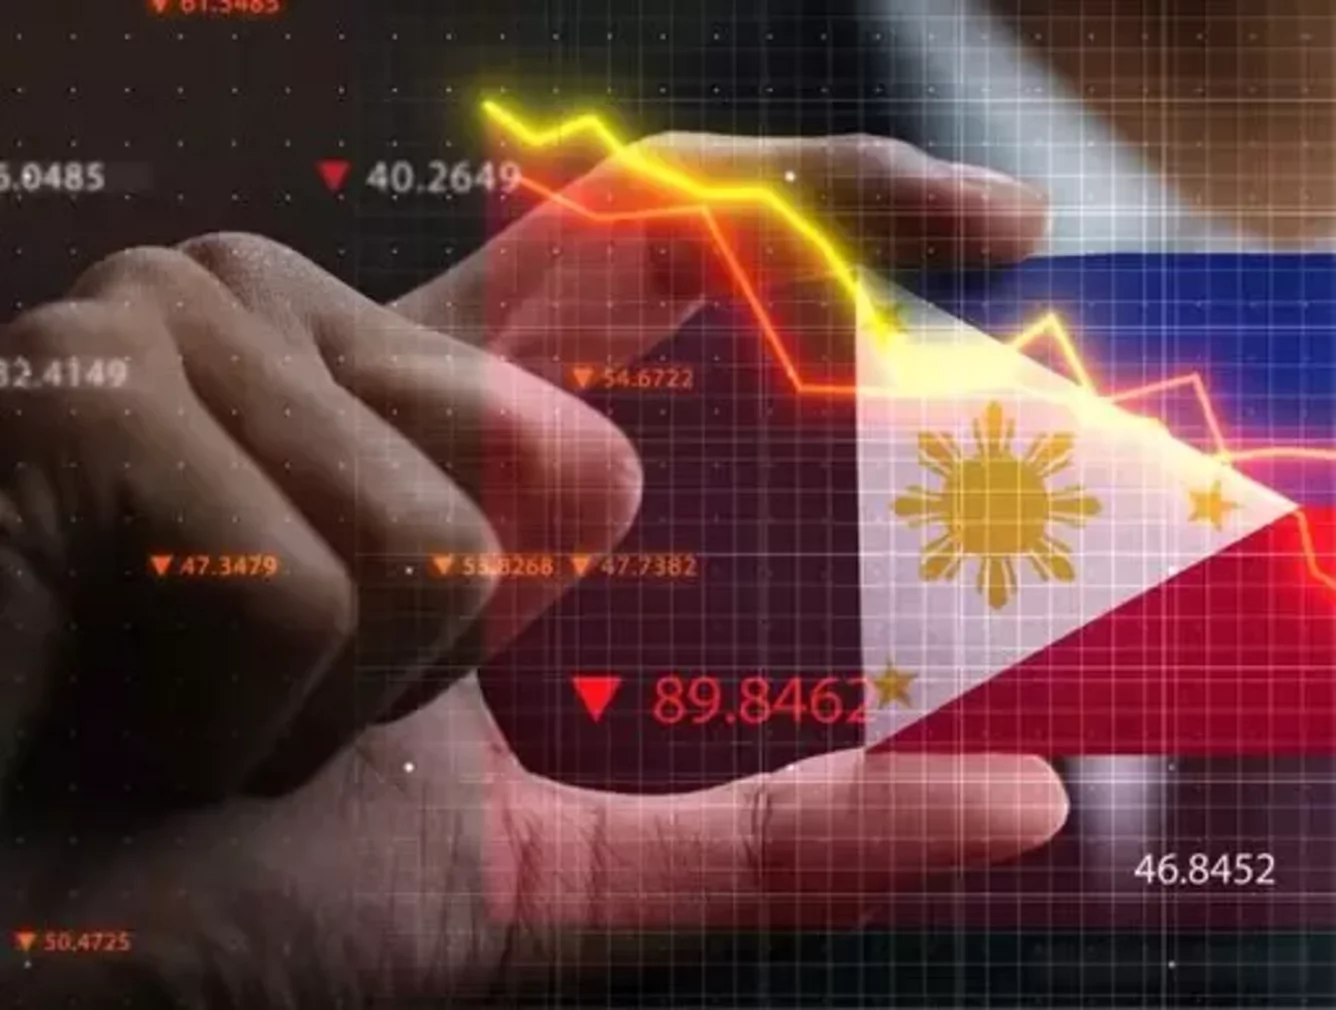 How to buy btc in philippines